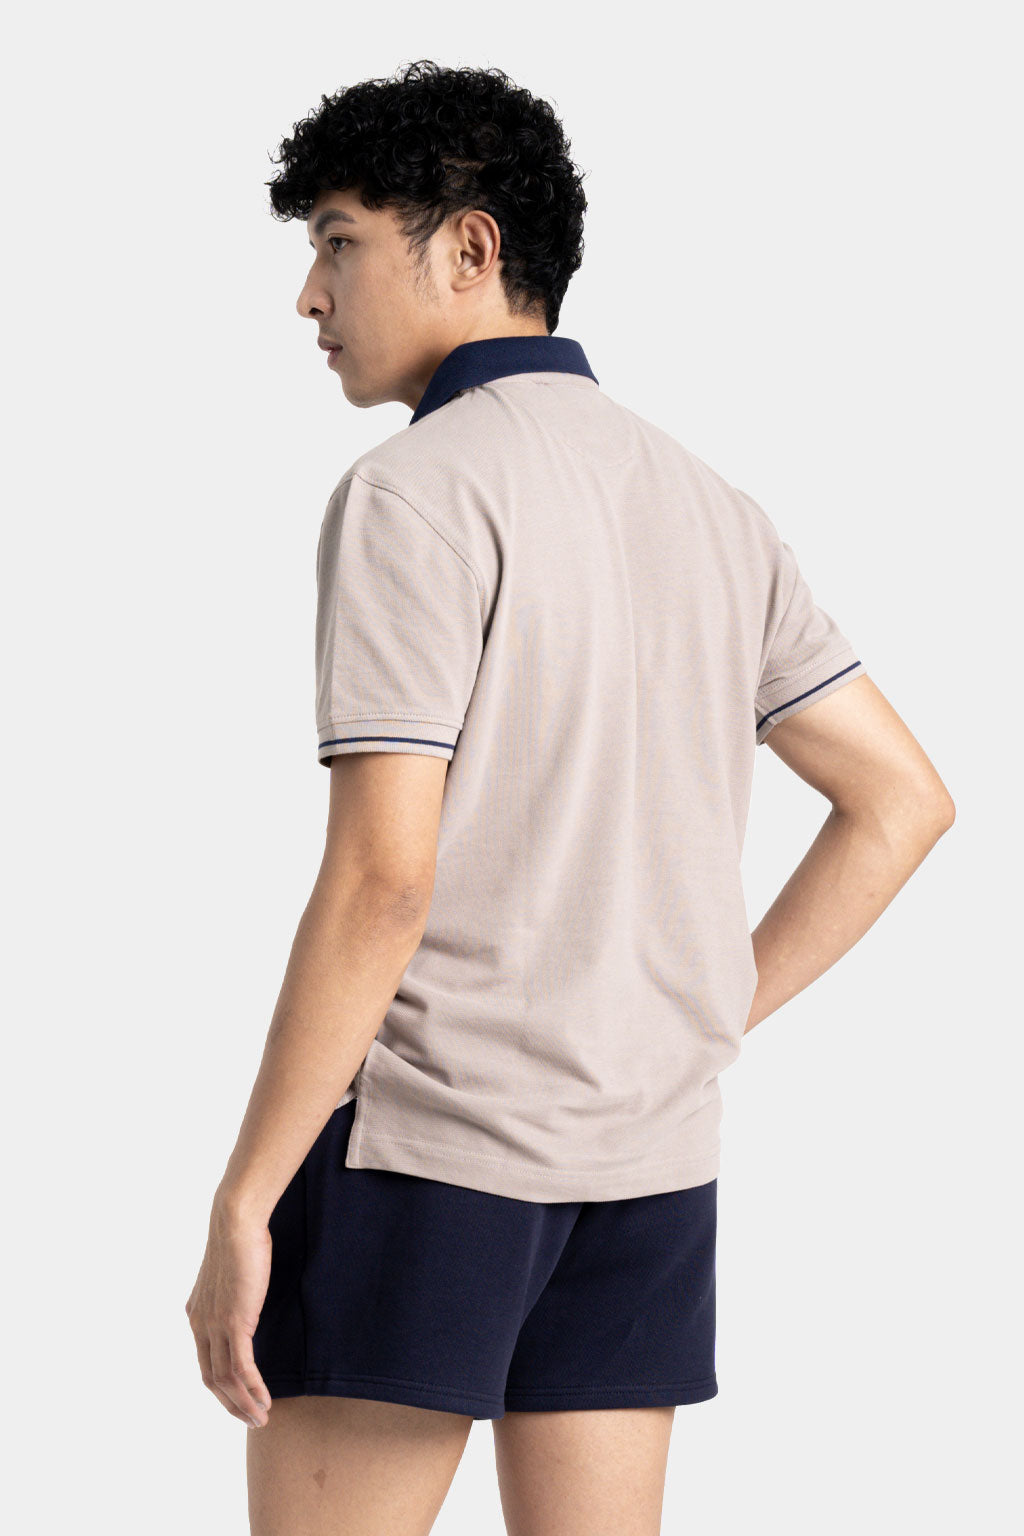 Bianco & Nero - Men's Polo T-Shirt